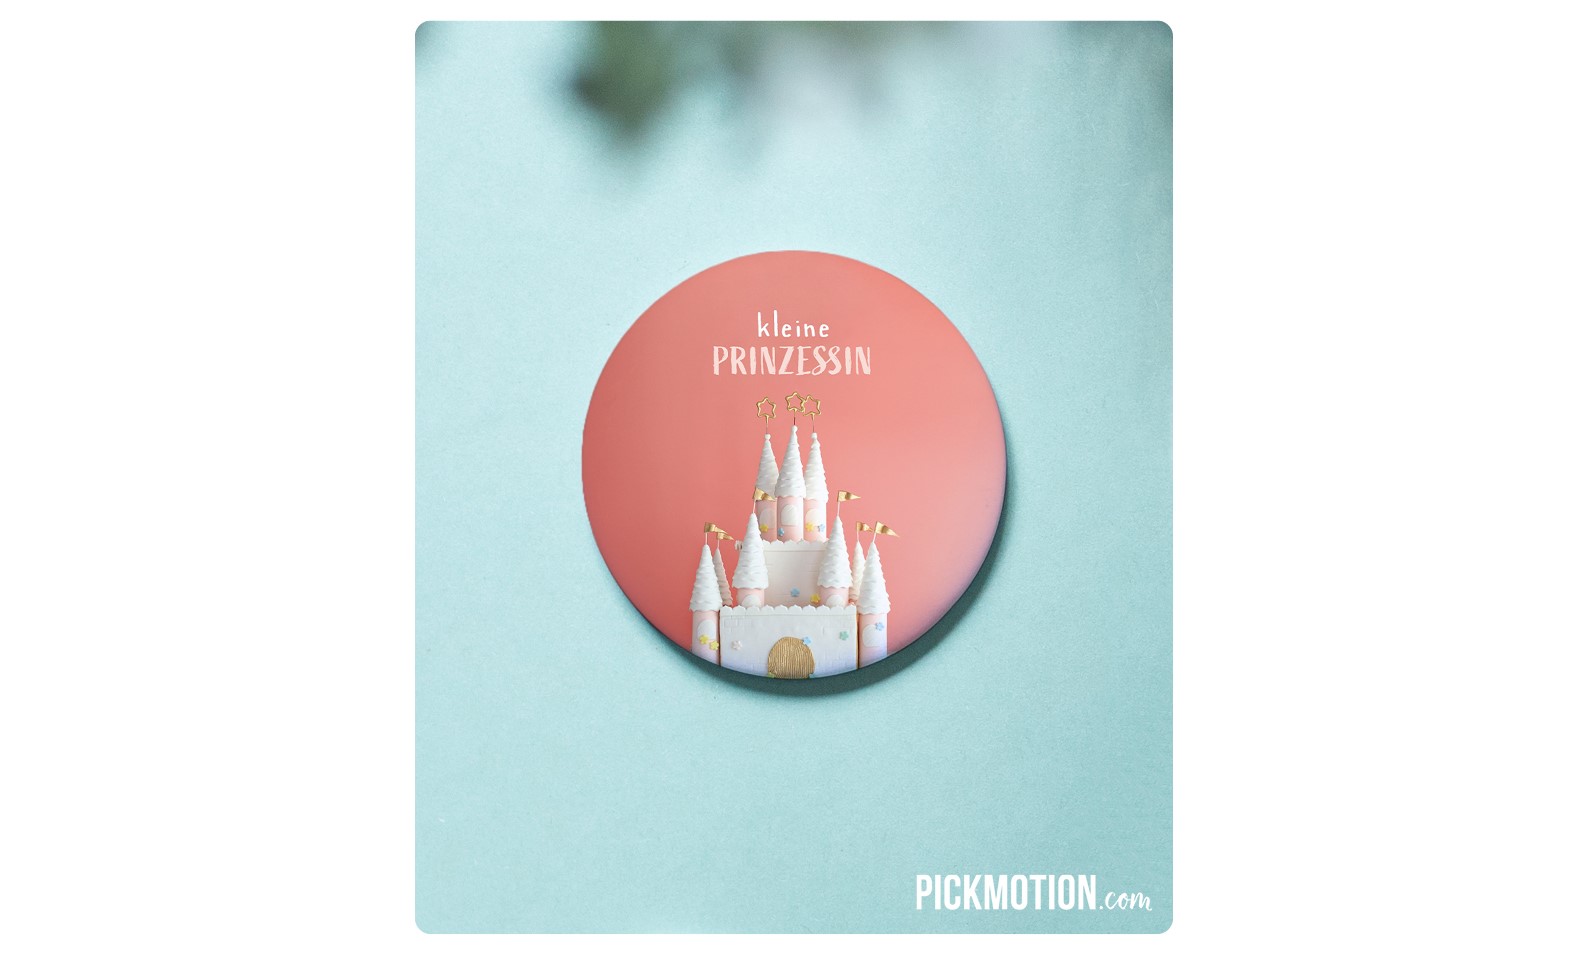 Pickmotion_Phototalk_romiconell_Magnet